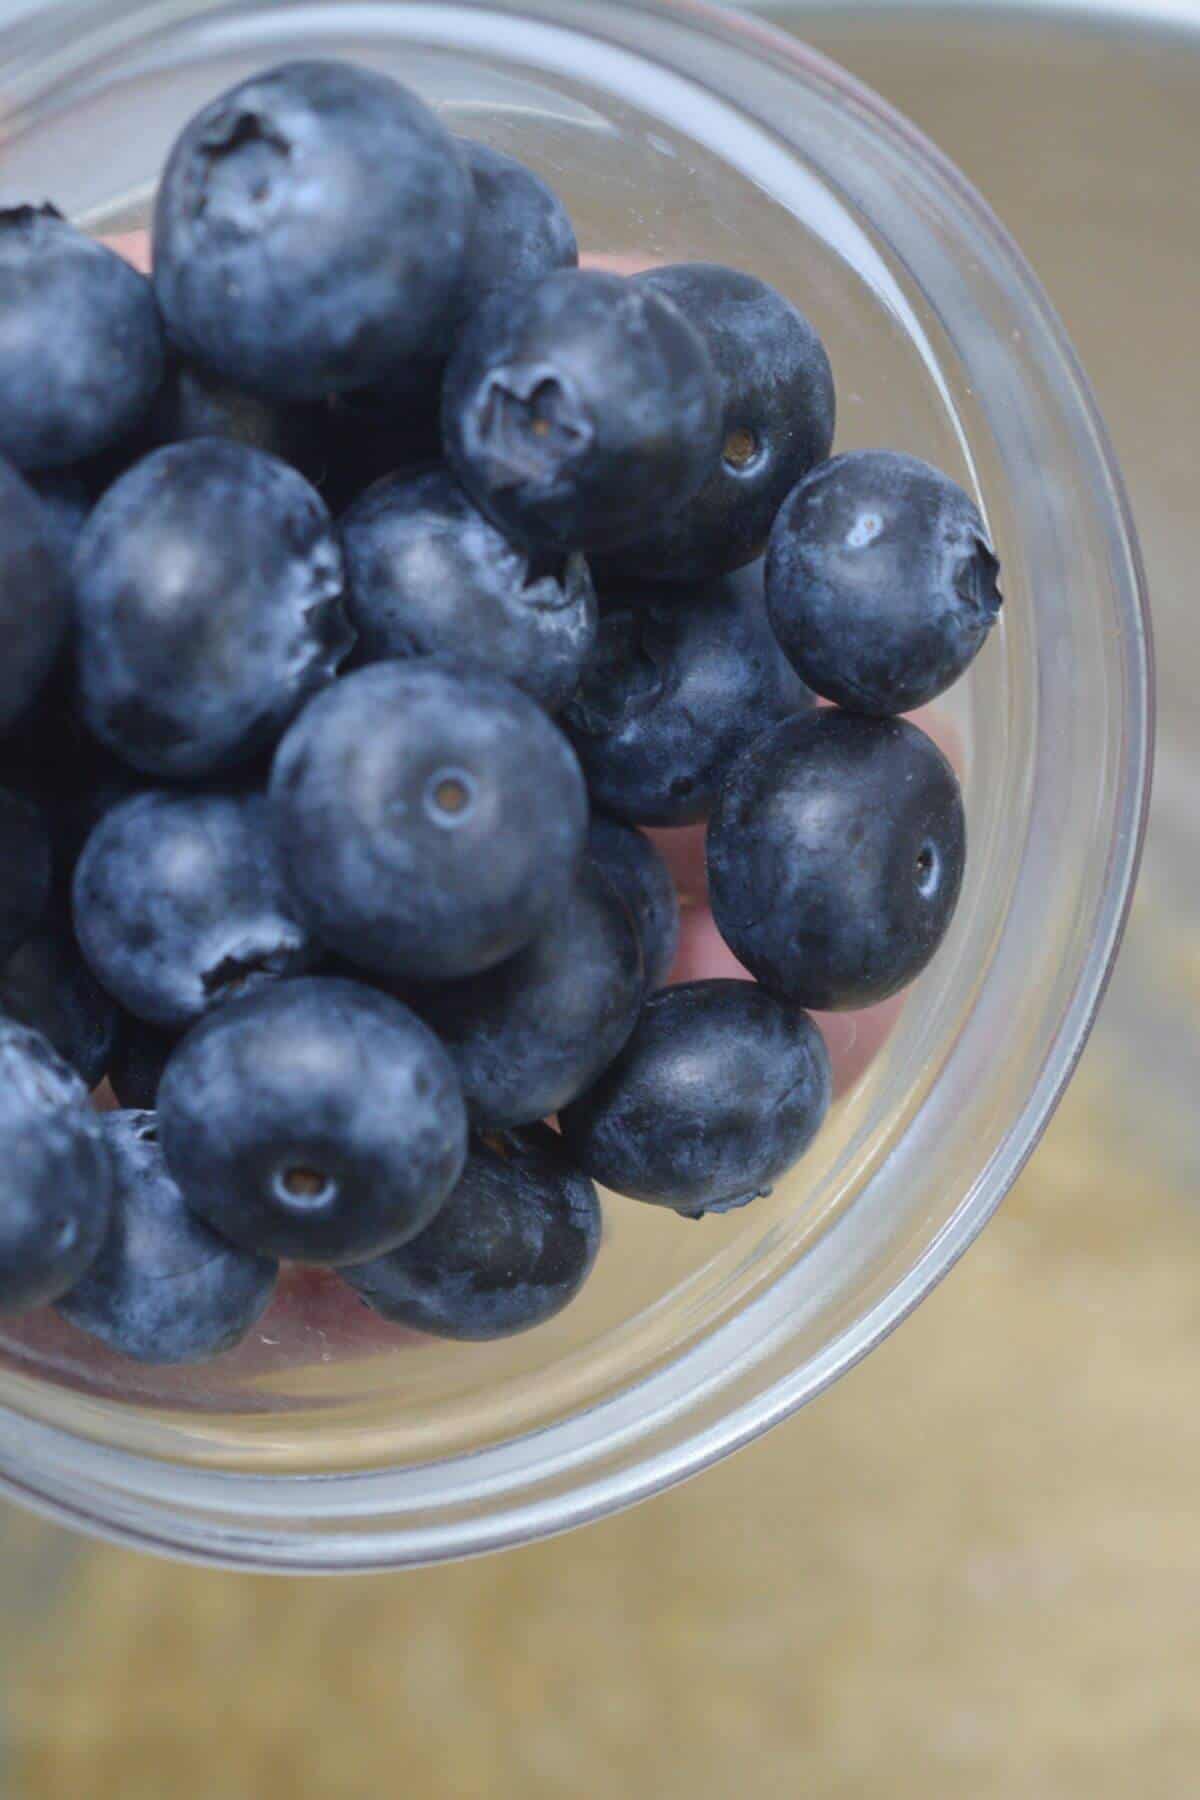 Adding fresh blueberries to mixing bowl.